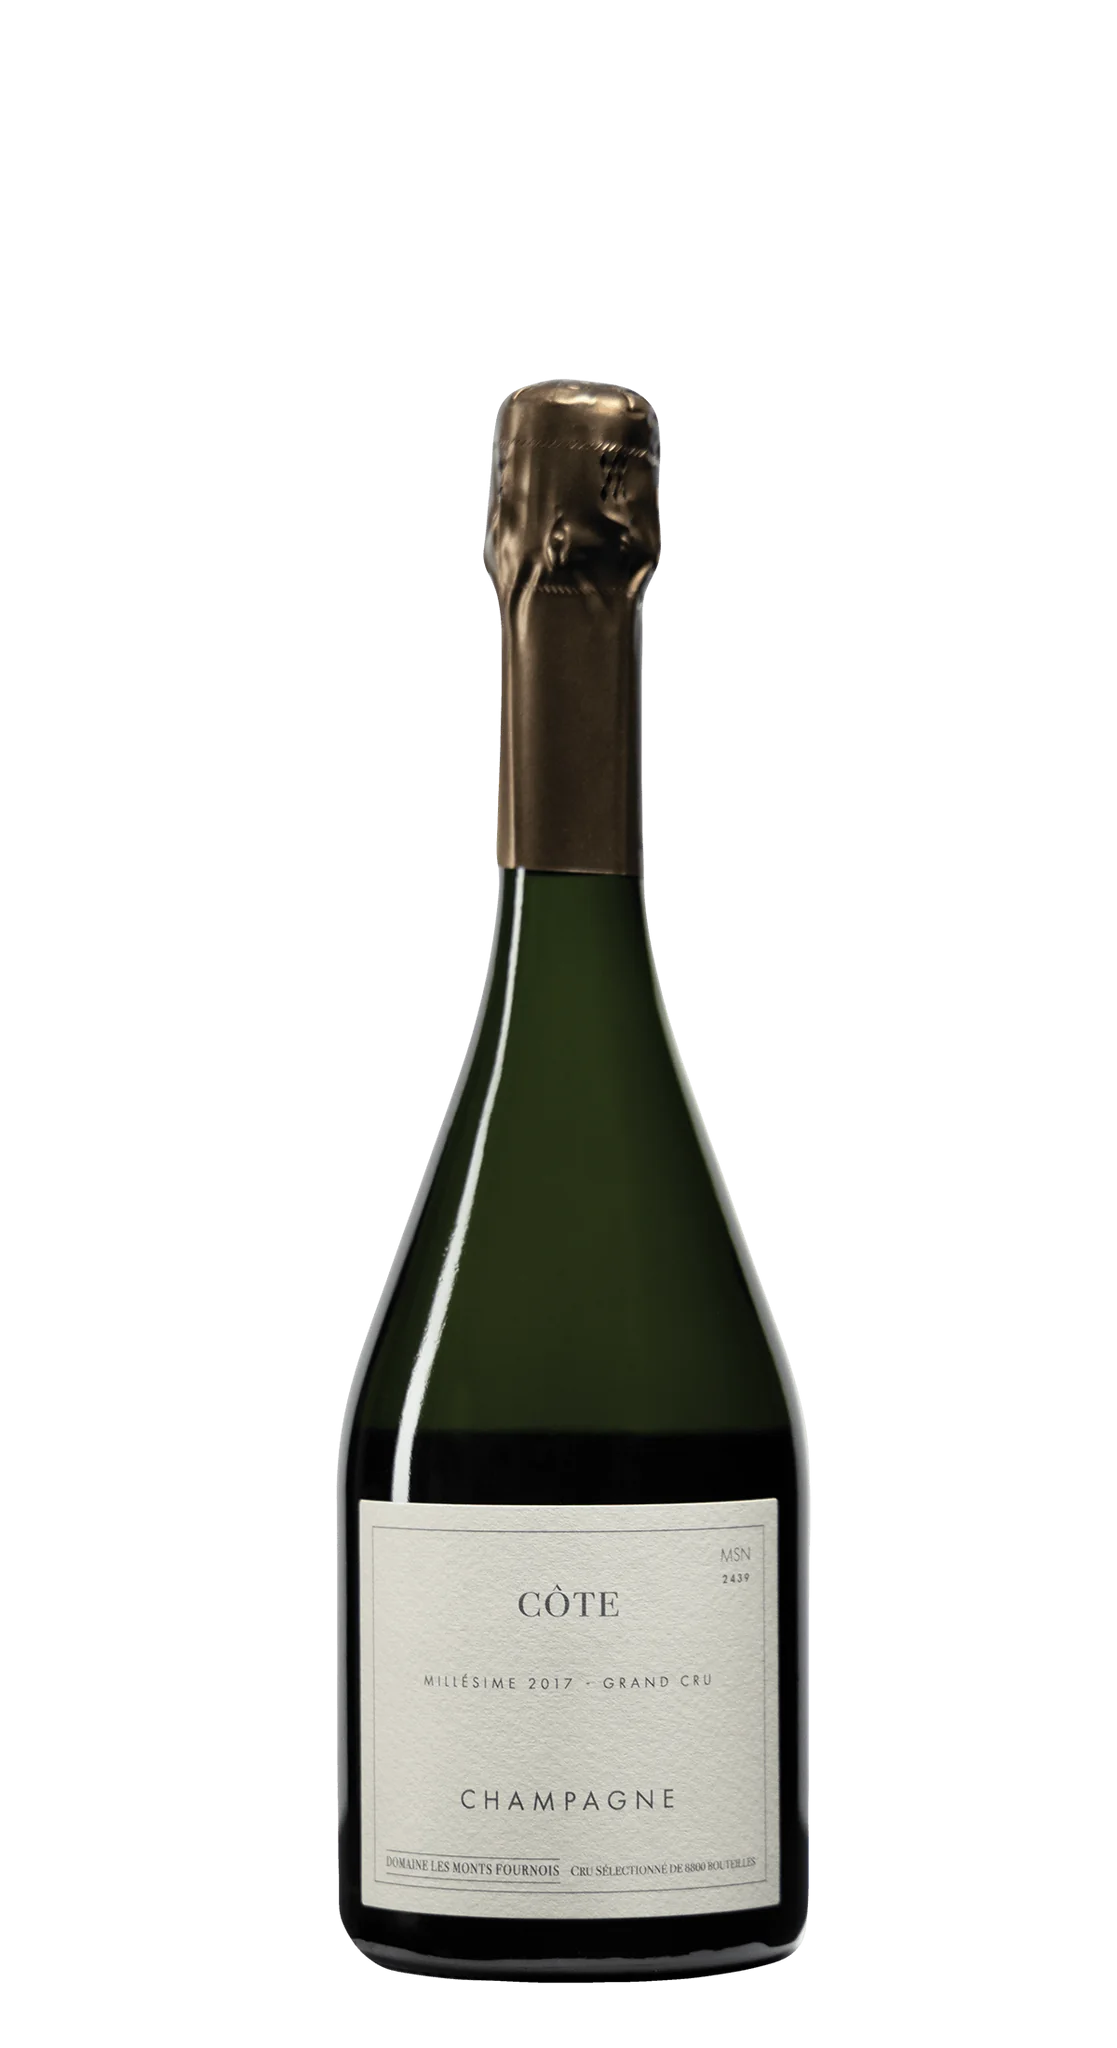 2017 Domaine Les Monts Fournois 'Cote' Mensil Oger Grand Cru Millesime Champagne, France - click image for full description